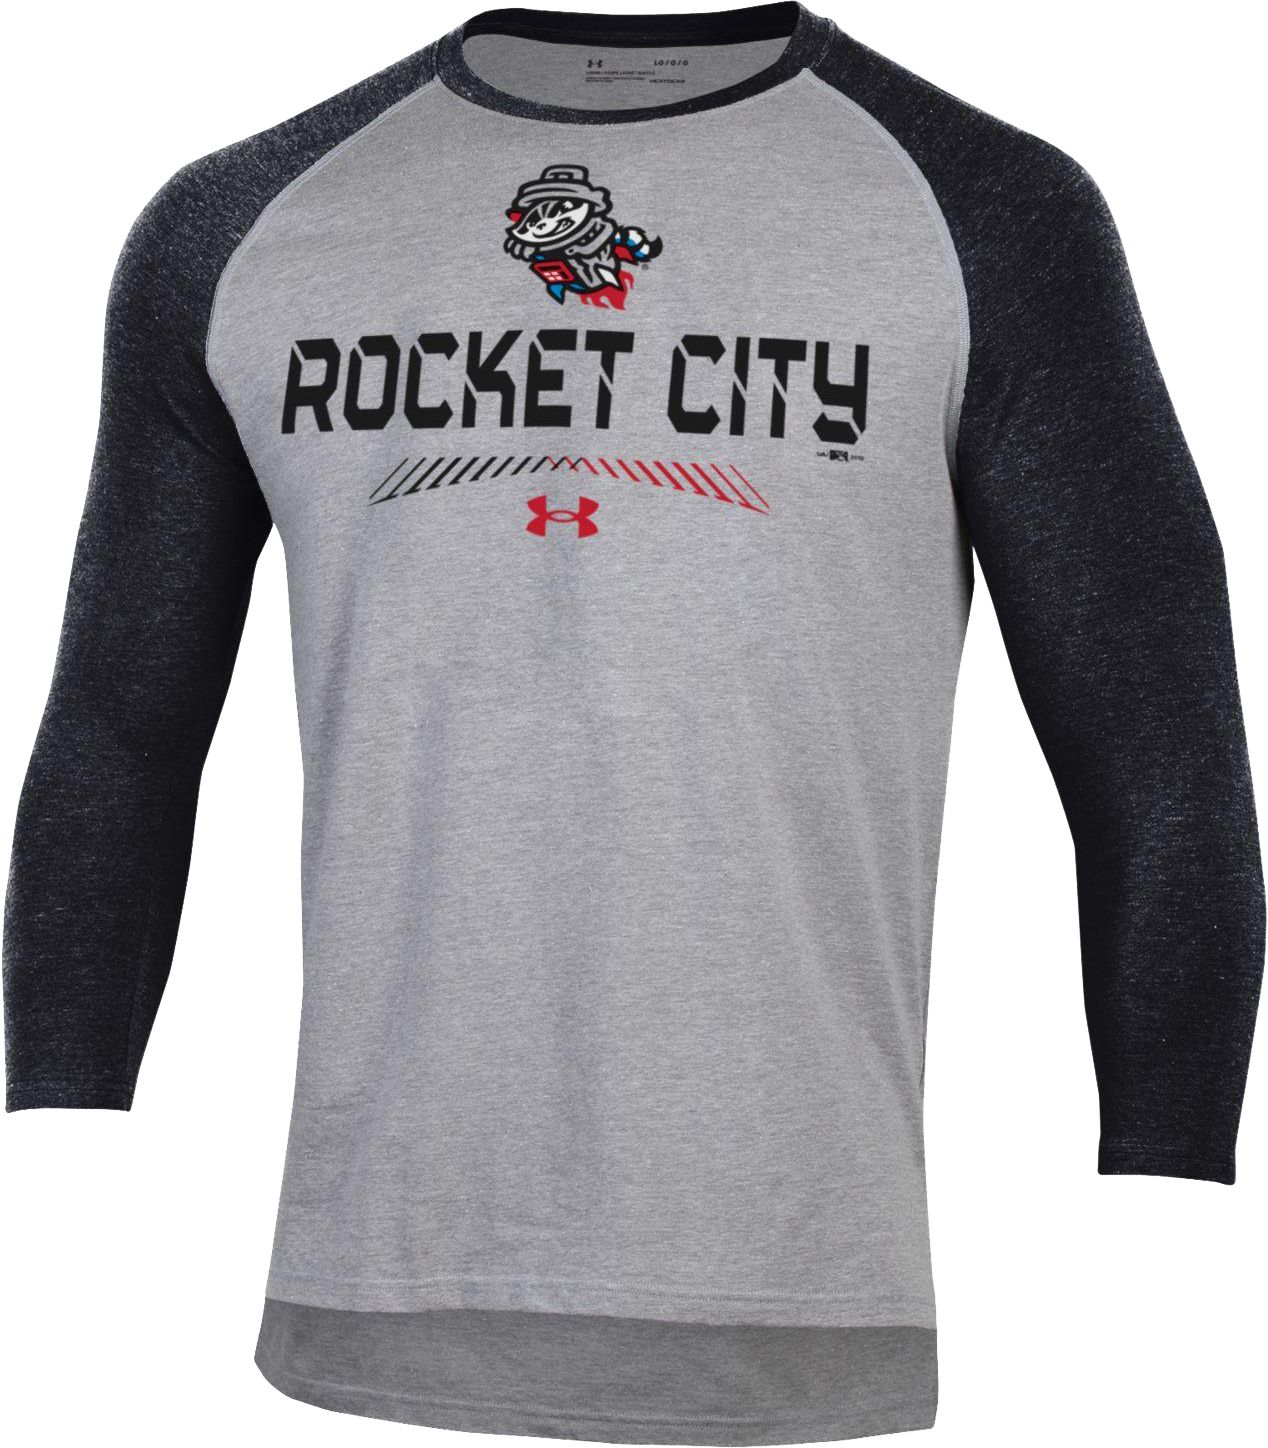 rocket city trash pandas jersey